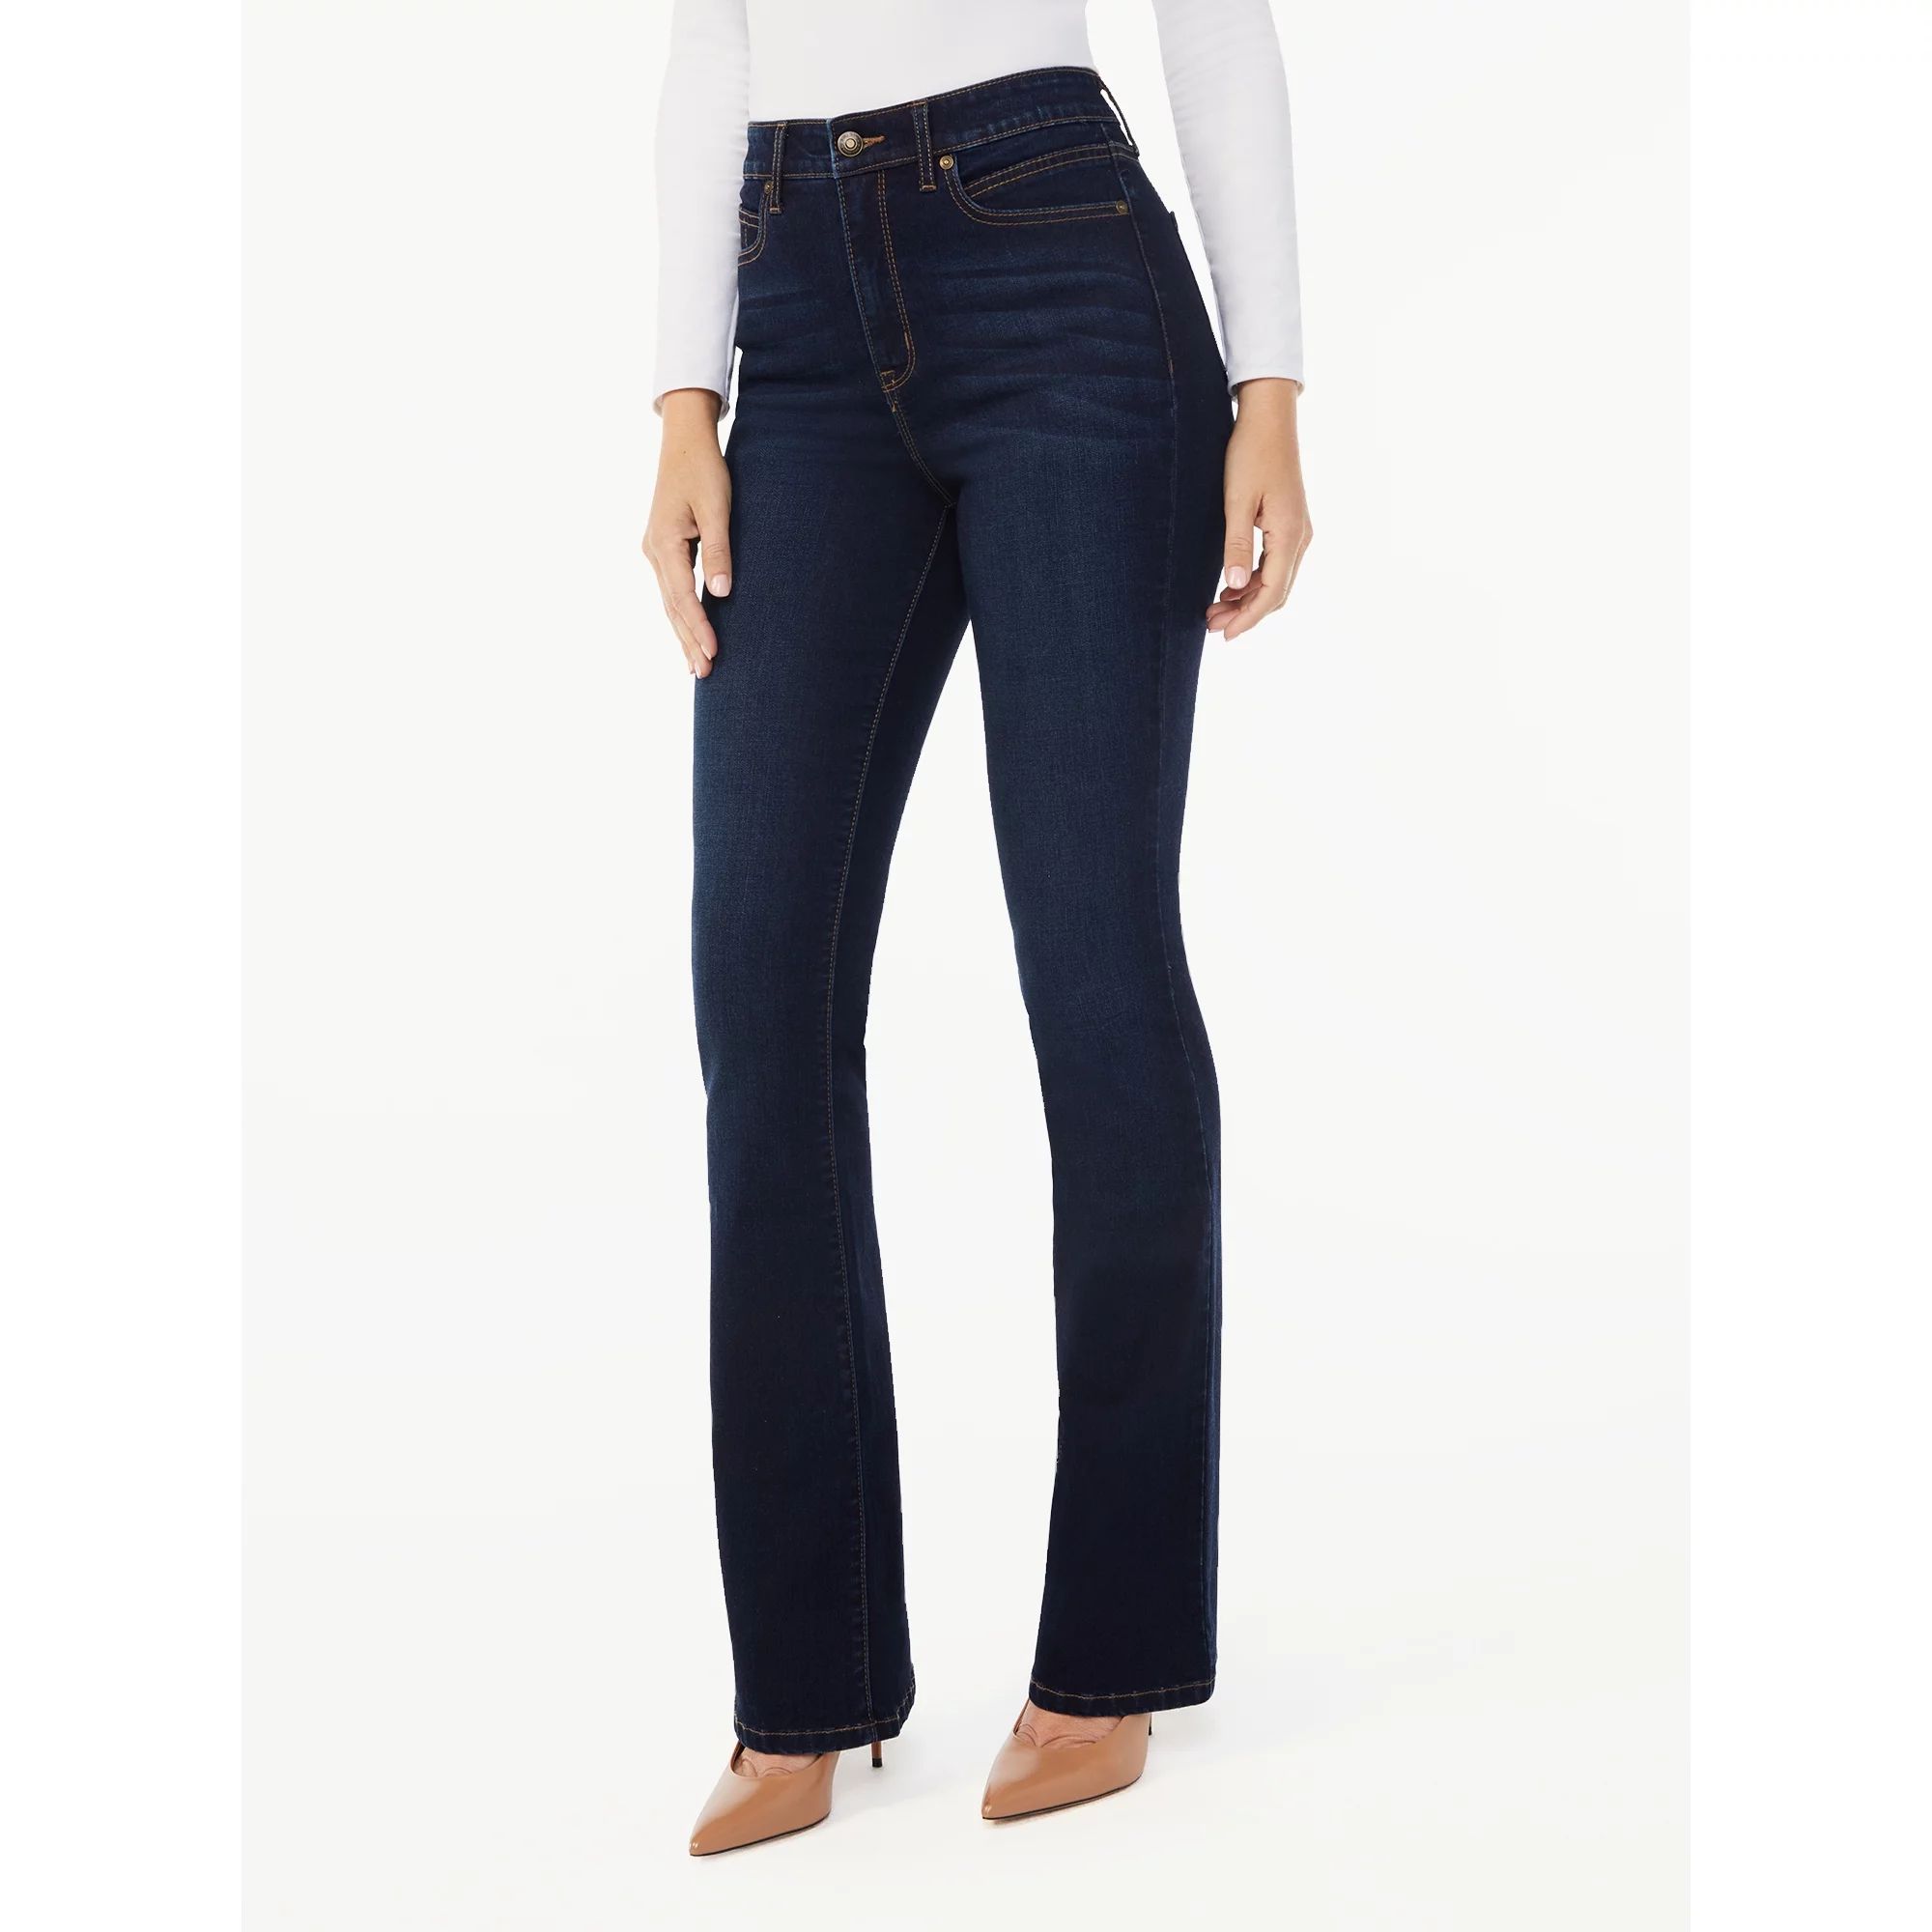 Sofia Jeans Women's Amaya Curvy Bootcut Super High Rise Jeans | Walmart (US)